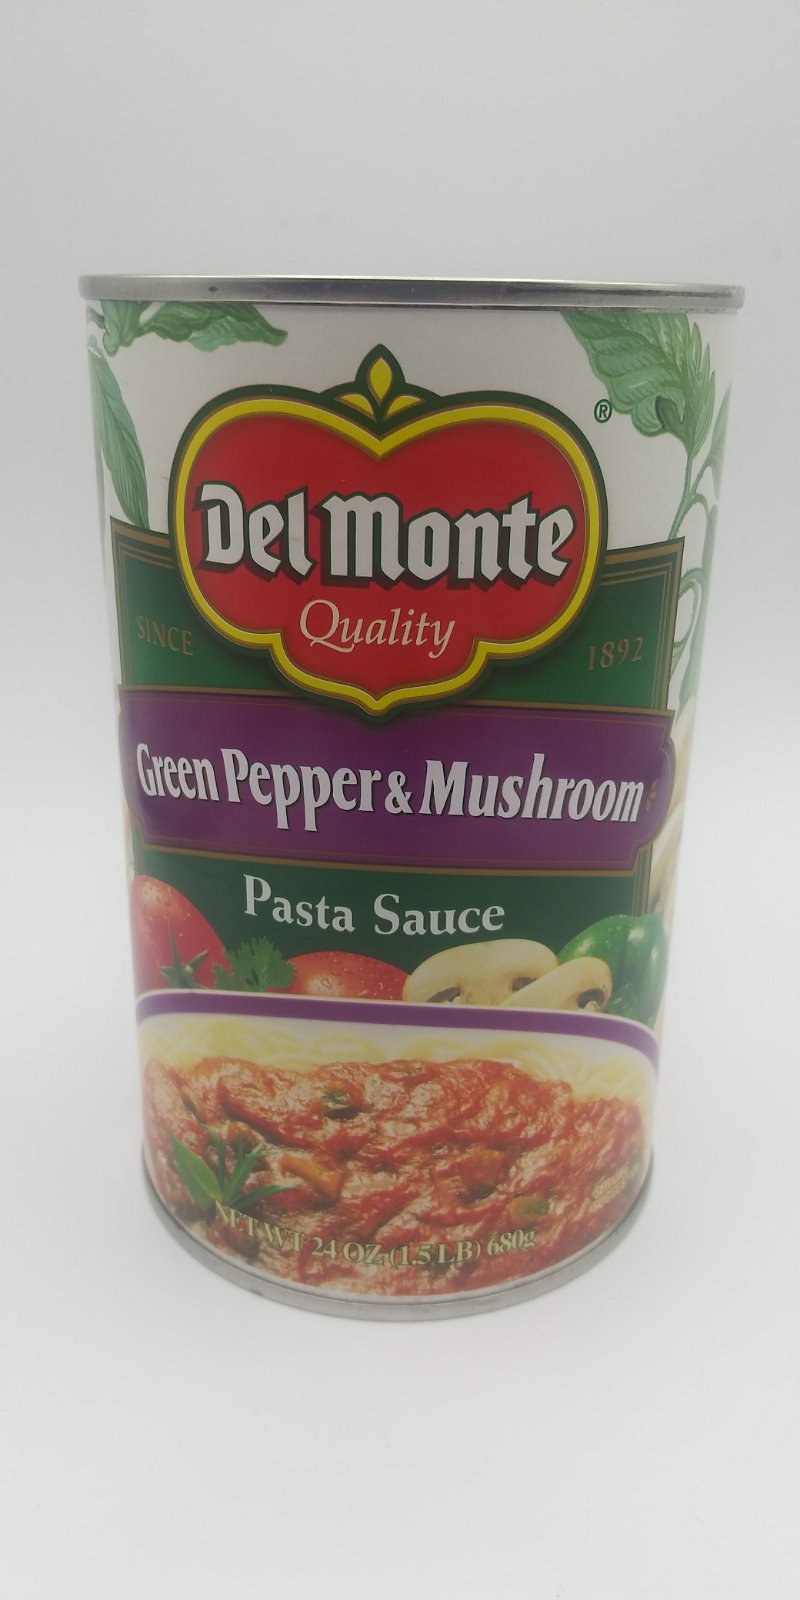 Green Pepper & Mushroom Pasta Sauce